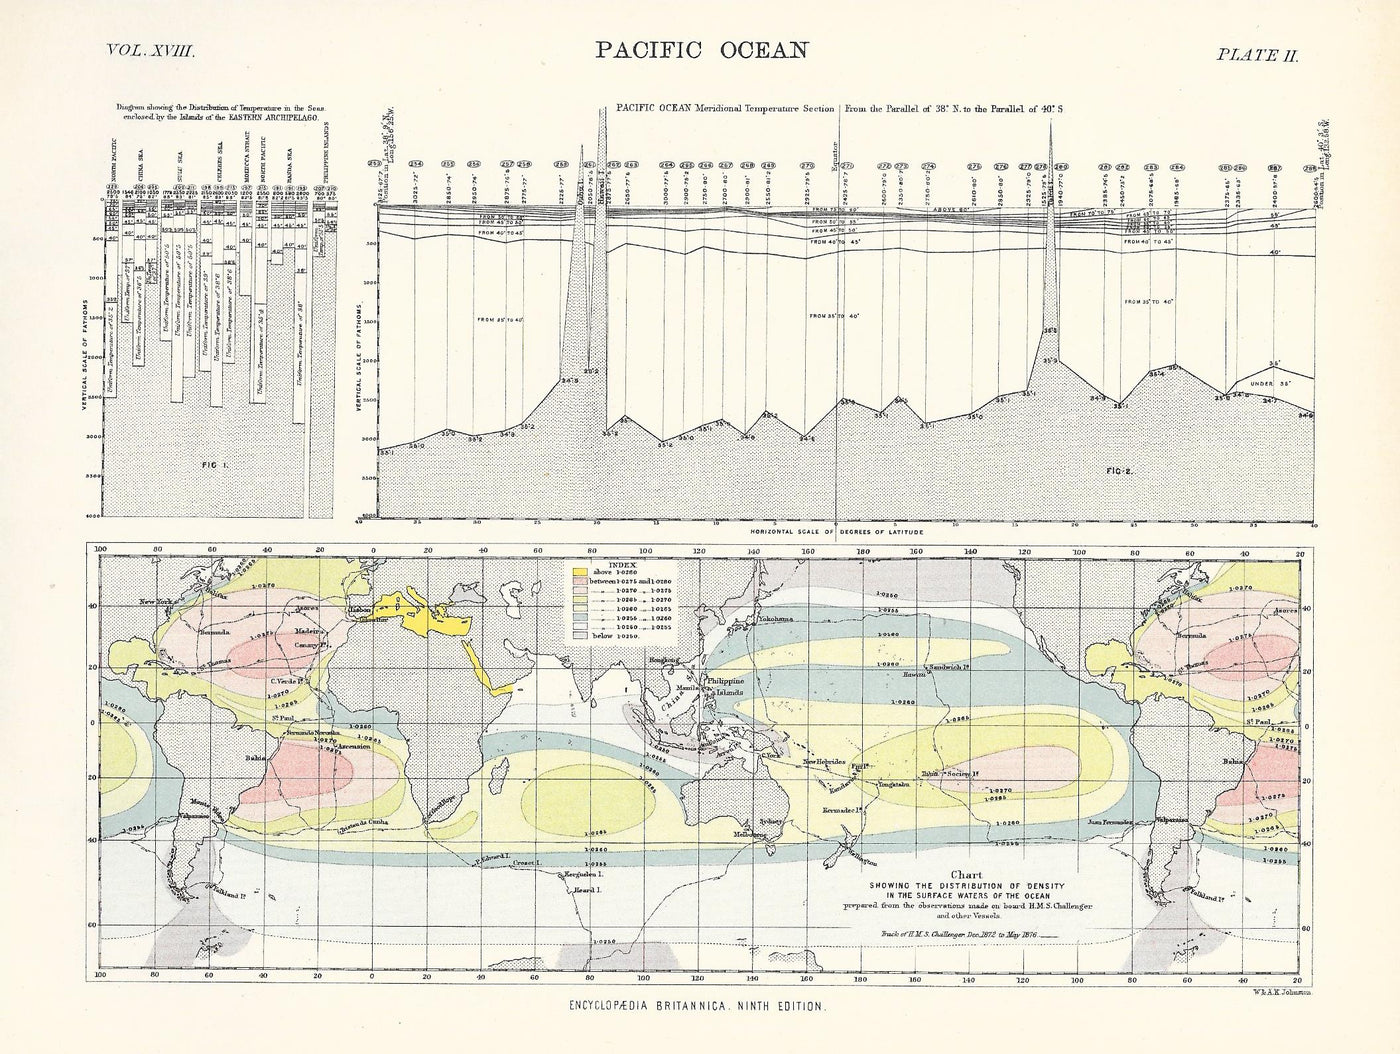 Pacific Ocean antique map from Encyclopaedia Britannica 1889